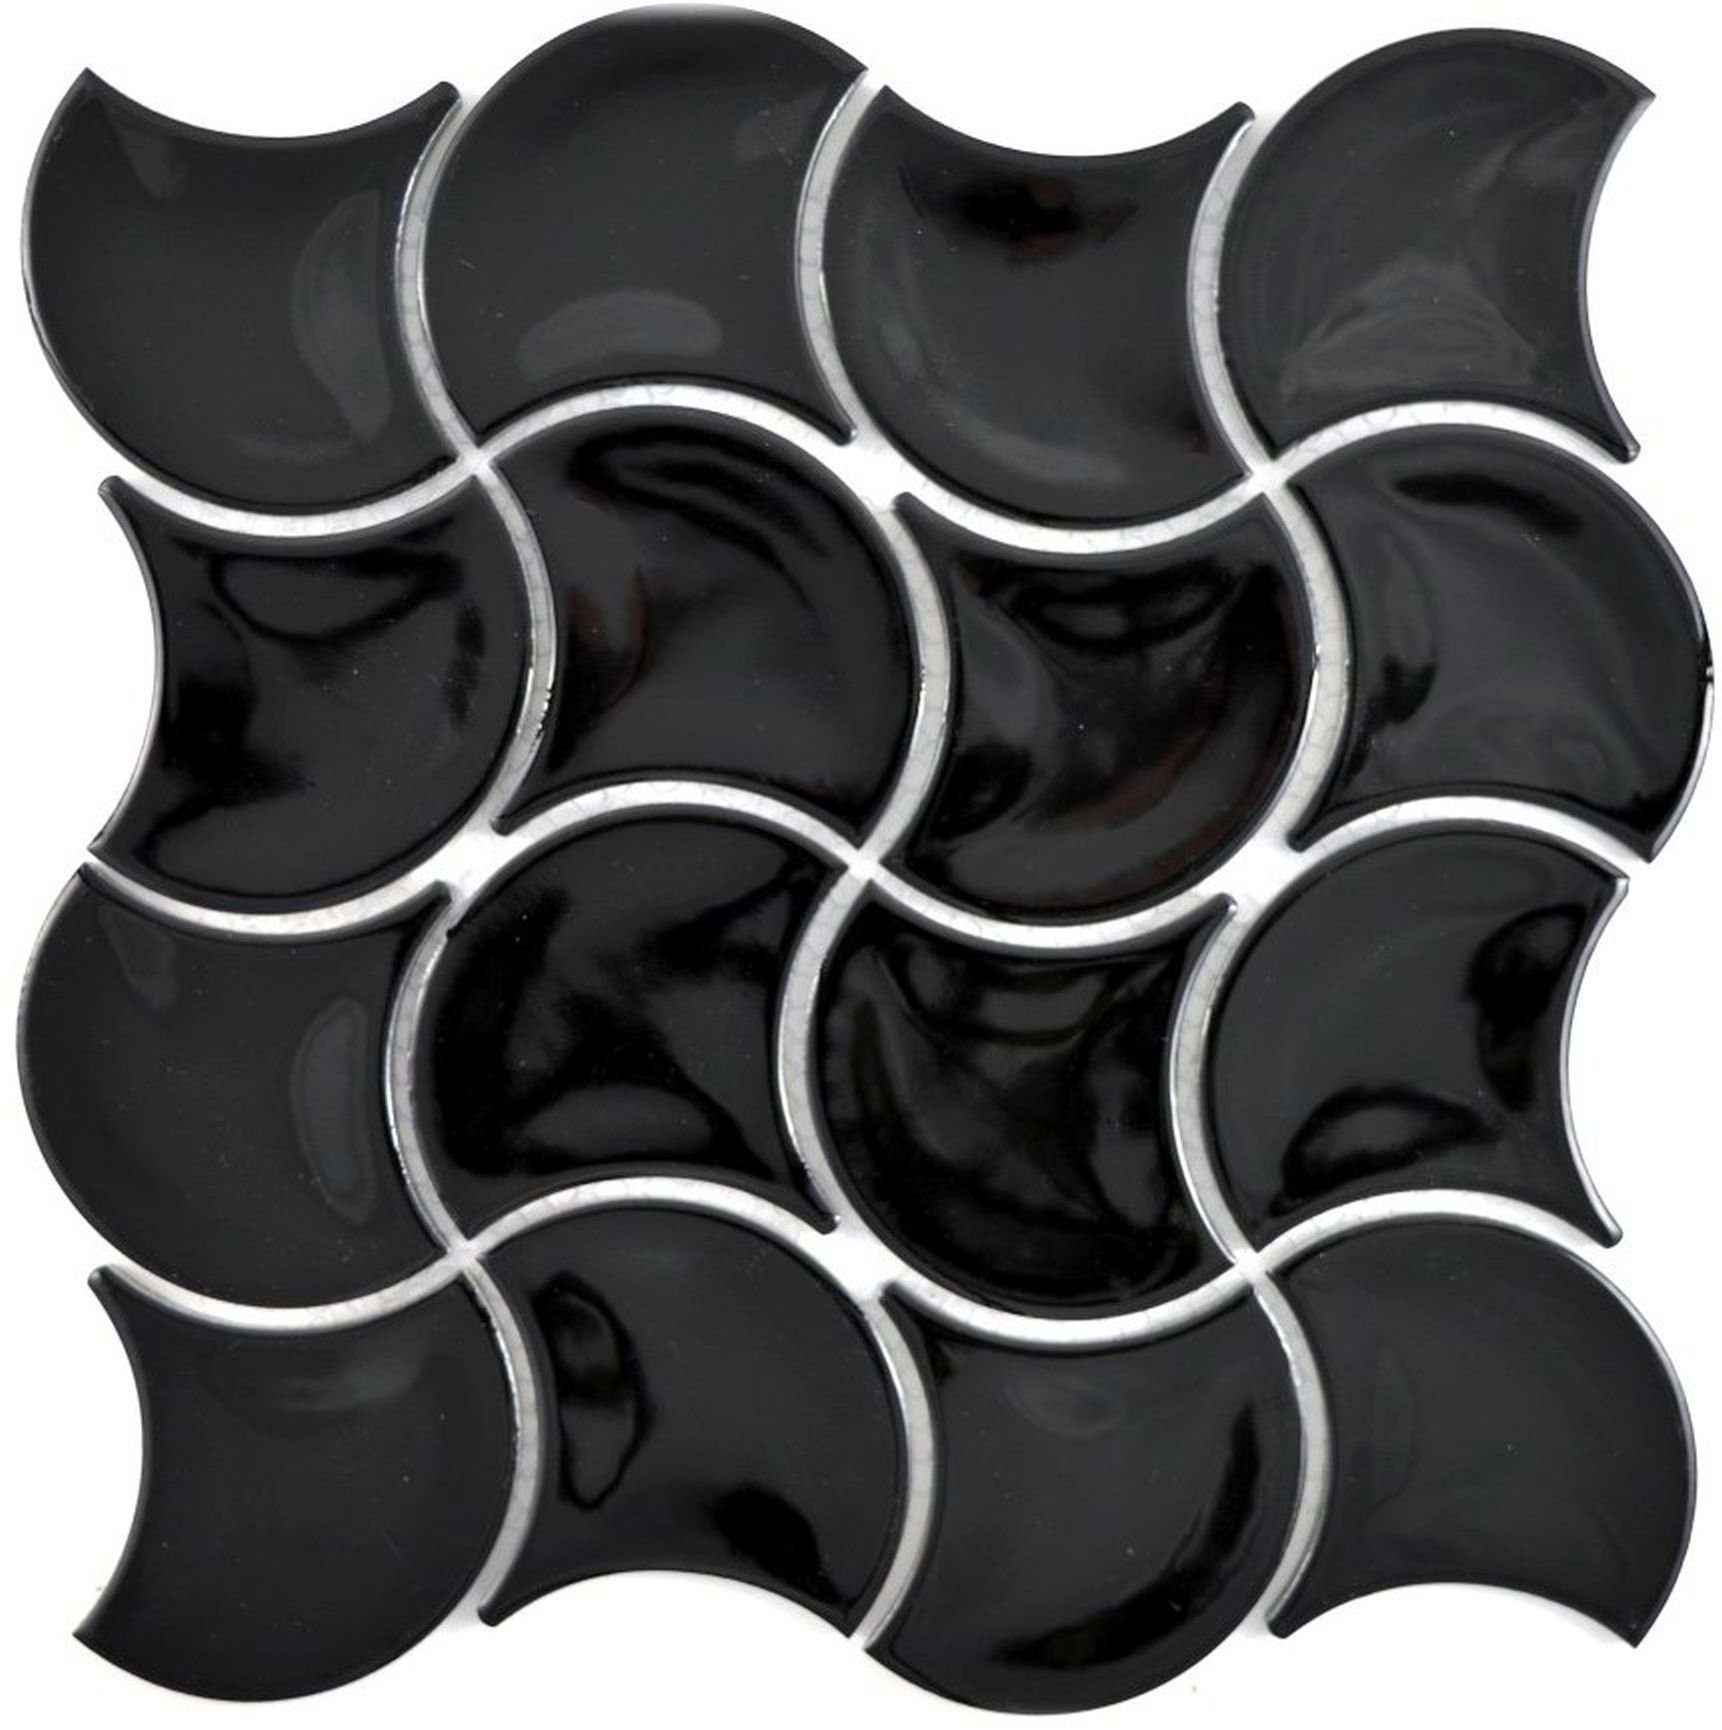 Mosani Mosaikfliesen Fächer Mosaik Fliese Keramik schwarz glänzend Welle Wand BadKüche